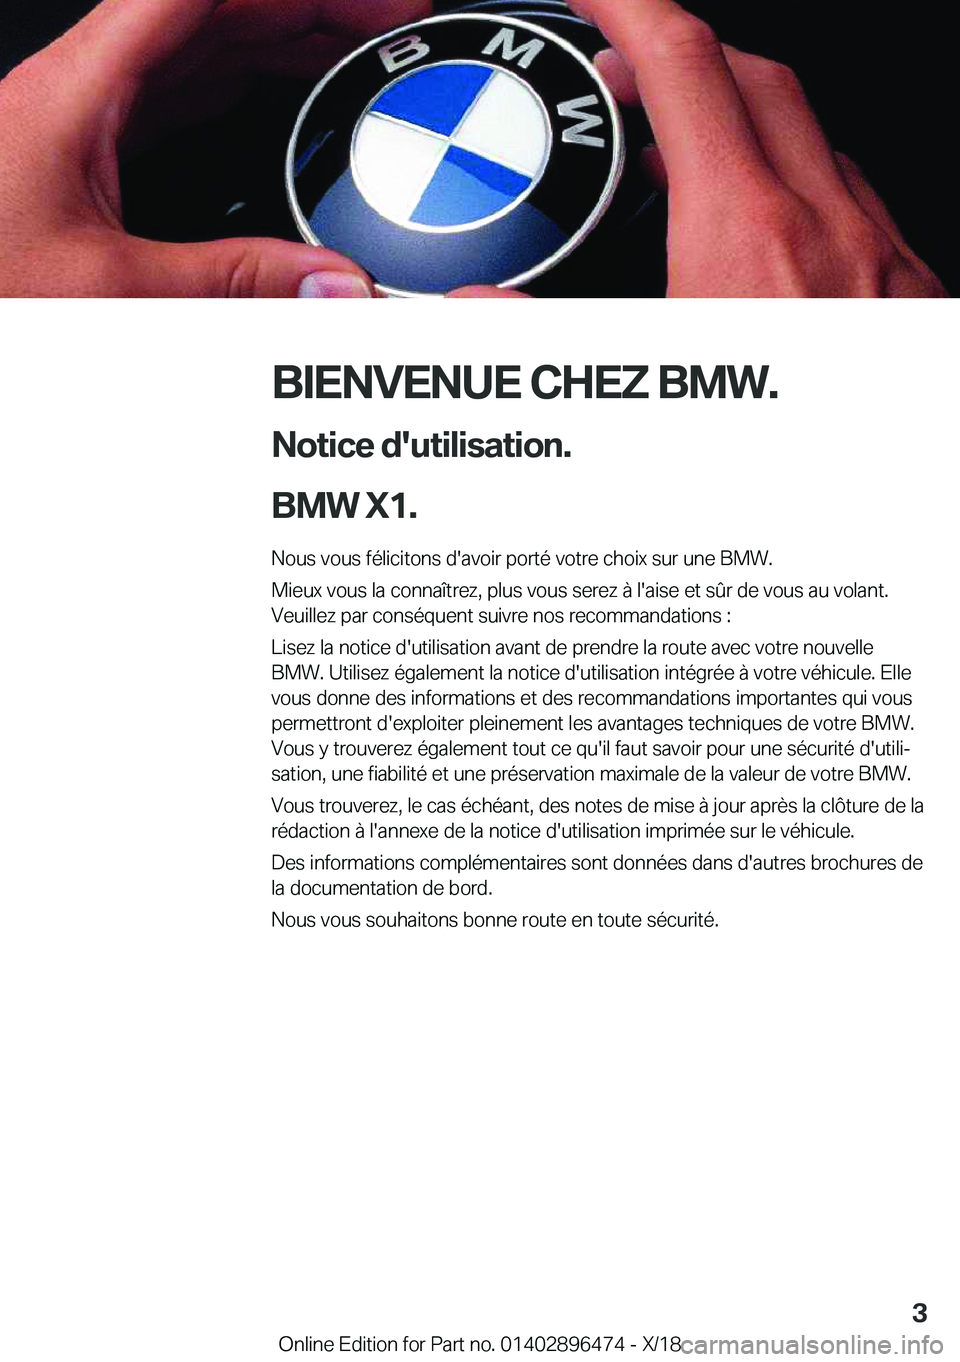 BMW X1 2019  Notices Demploi (in French) �B�I�E�N�V�E�N�U�E��C�H�E�Z��B�M�W�.�N�o�t�i�c�e��d�'�u�t�i�l�i�s�a�t�i�o�n�.
�B�M�W��X�1�. �N�o�u�s��v�o�u�s��f�é�l�i�c�i�t�o�n�s��d�'�a�v�o�i�r��p�o�r�t�é��v�o�t�r�e��c�h�o�i�x�